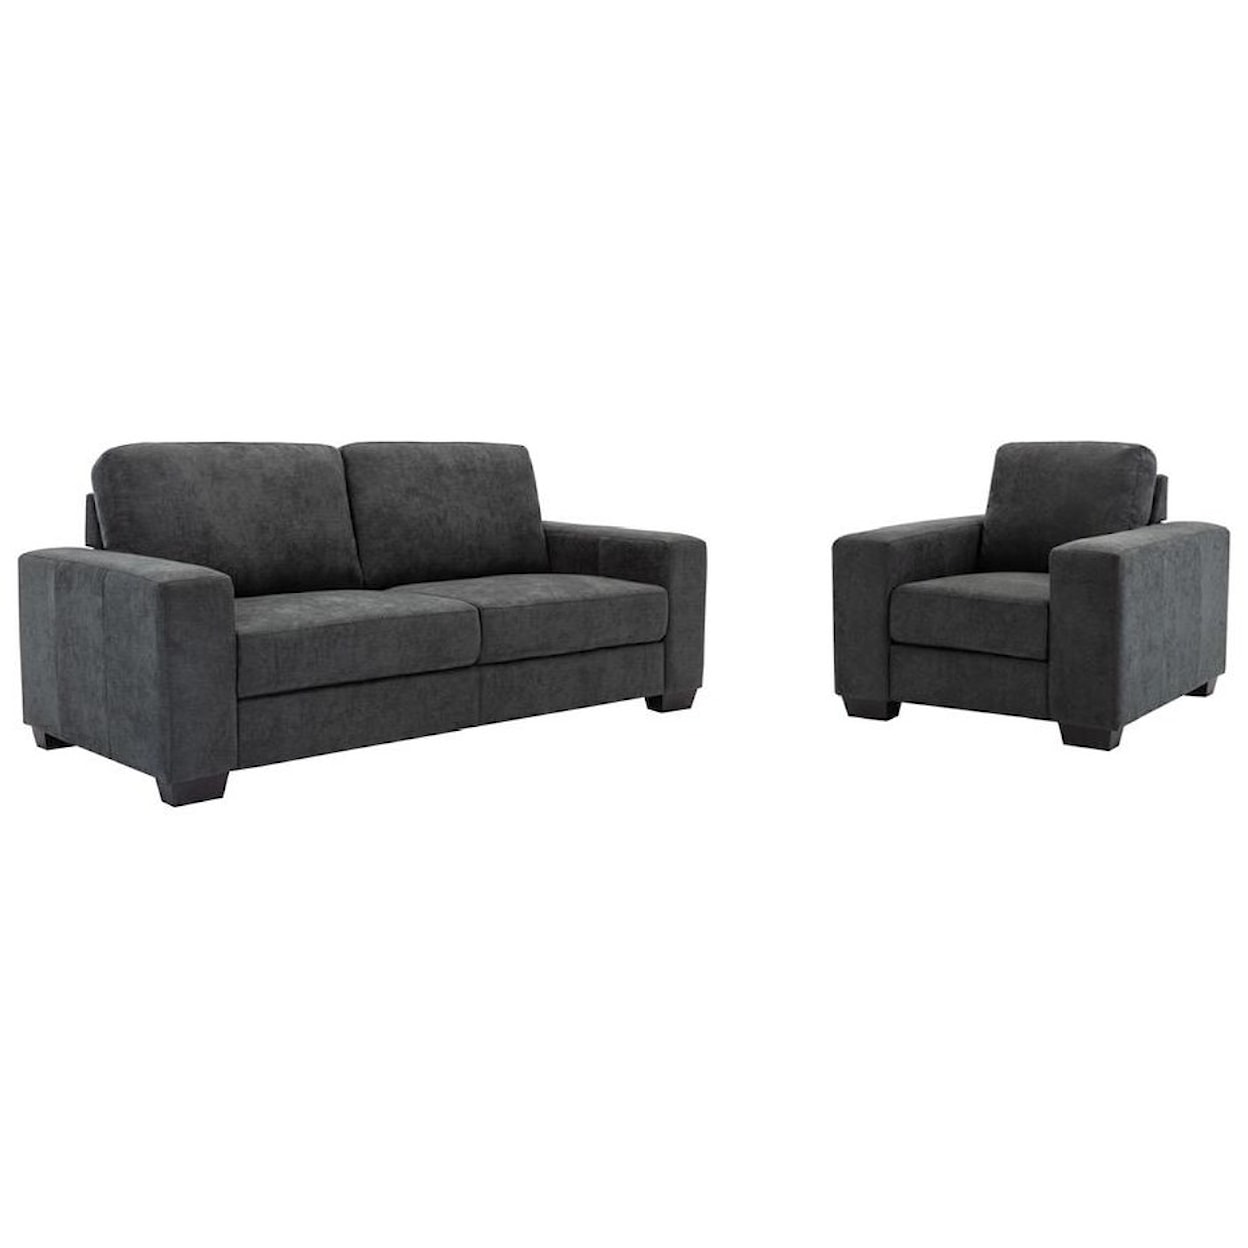 Lifestyle U2348 Dark Grey Sofa and Chair Set